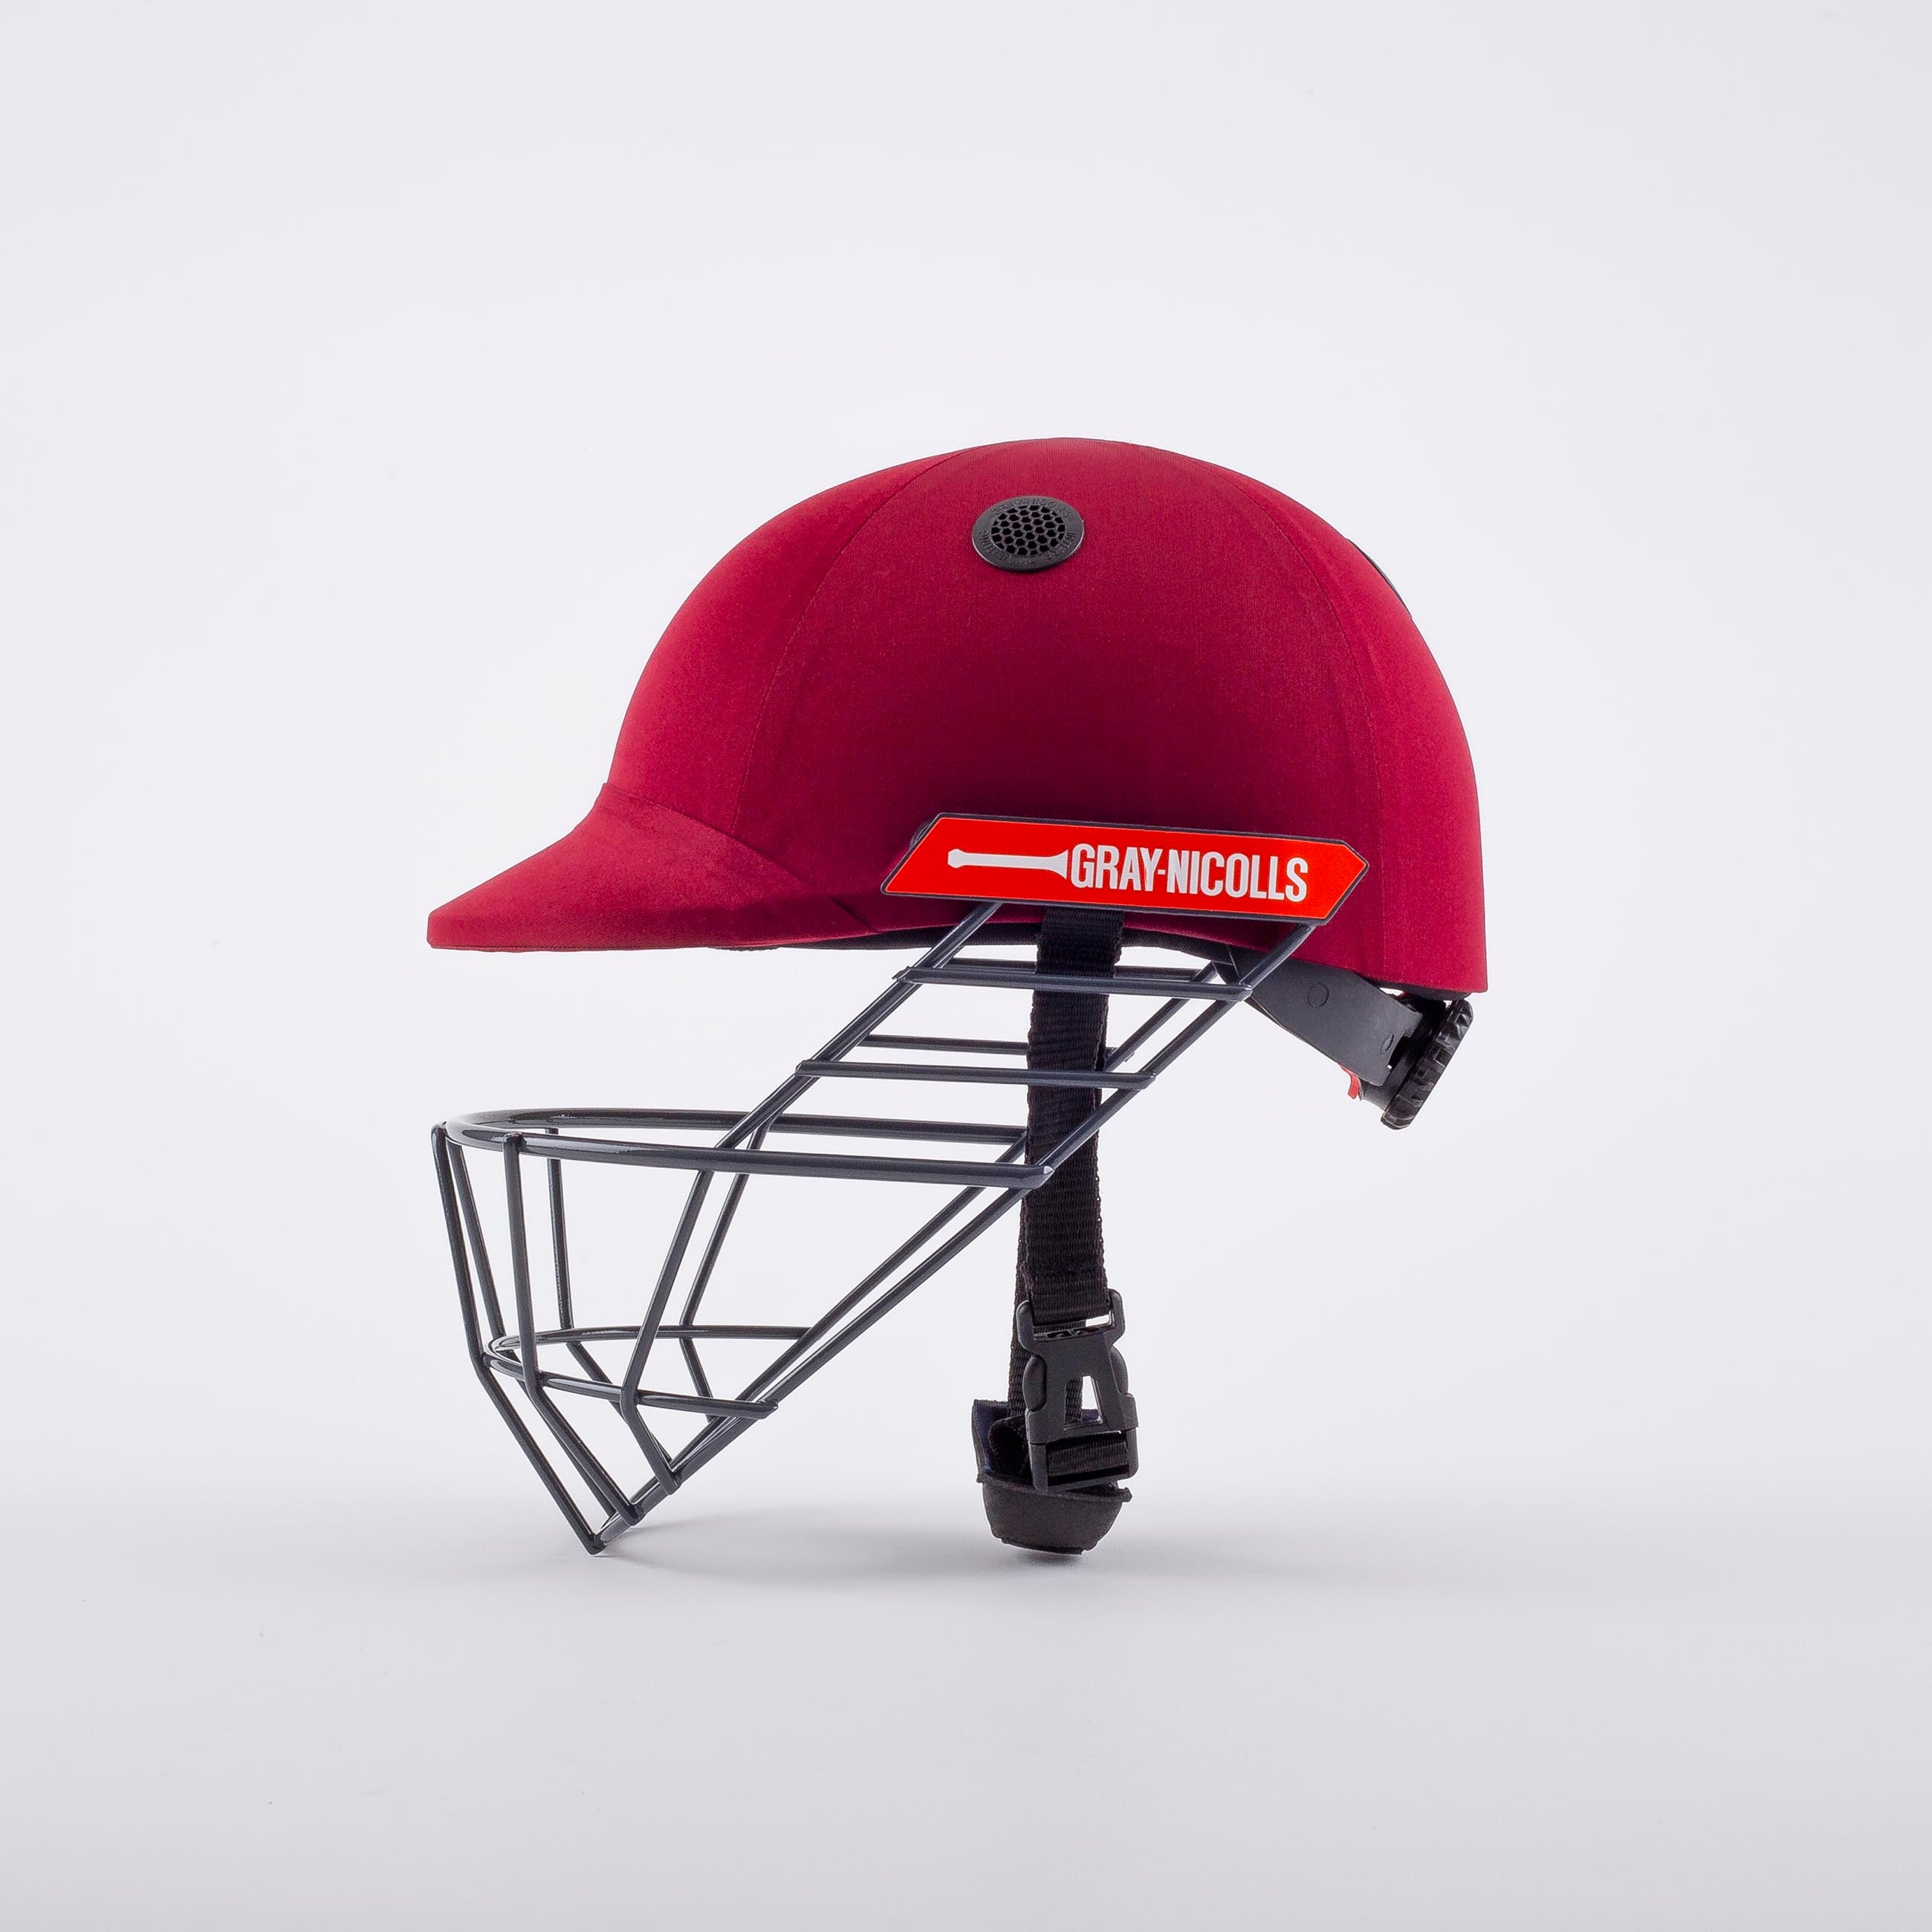 Atomic Cricket Helmet